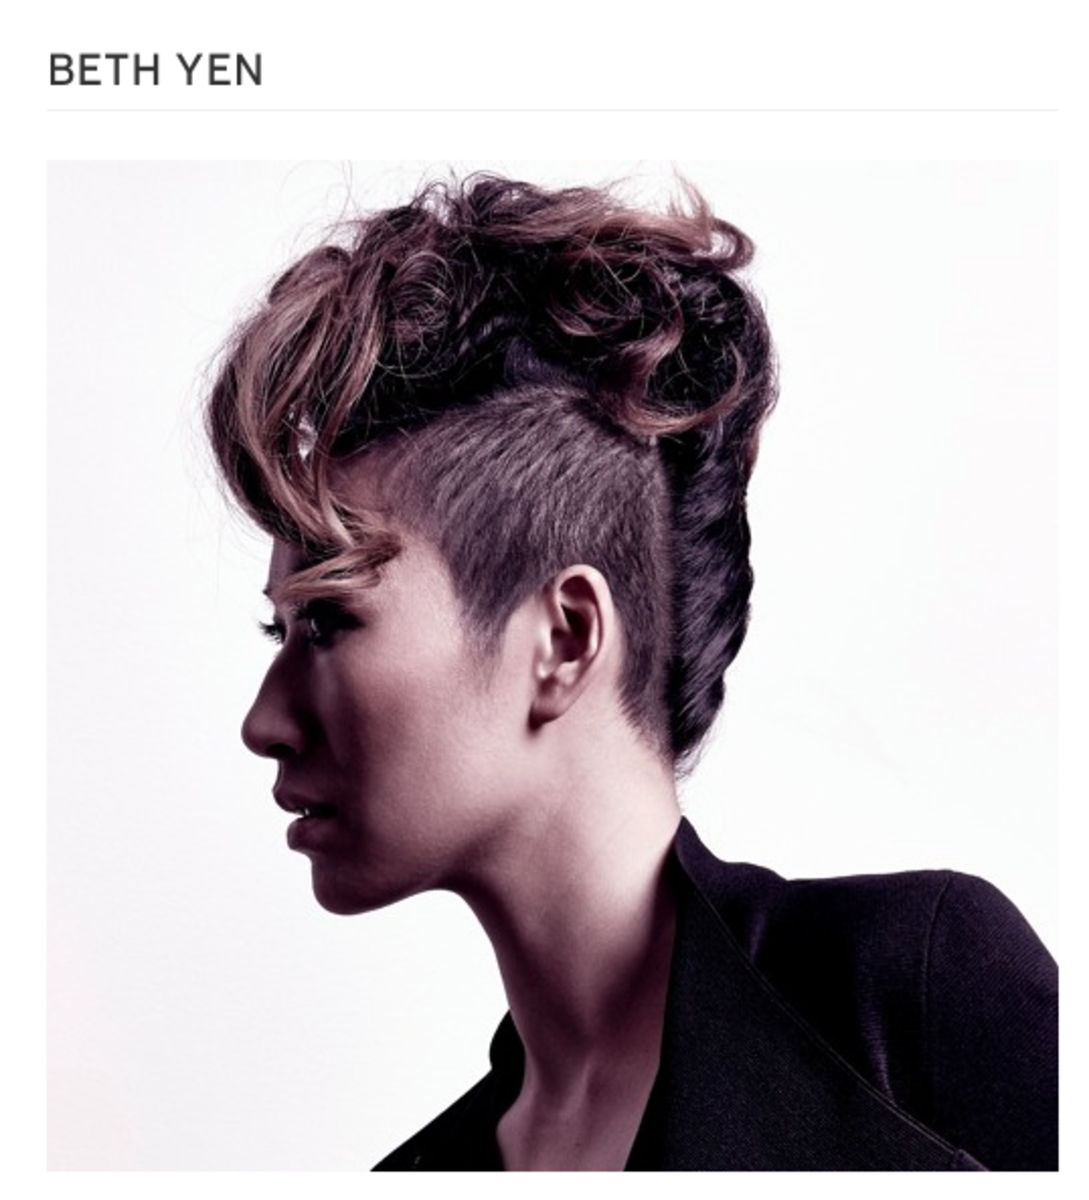 Beth Yen